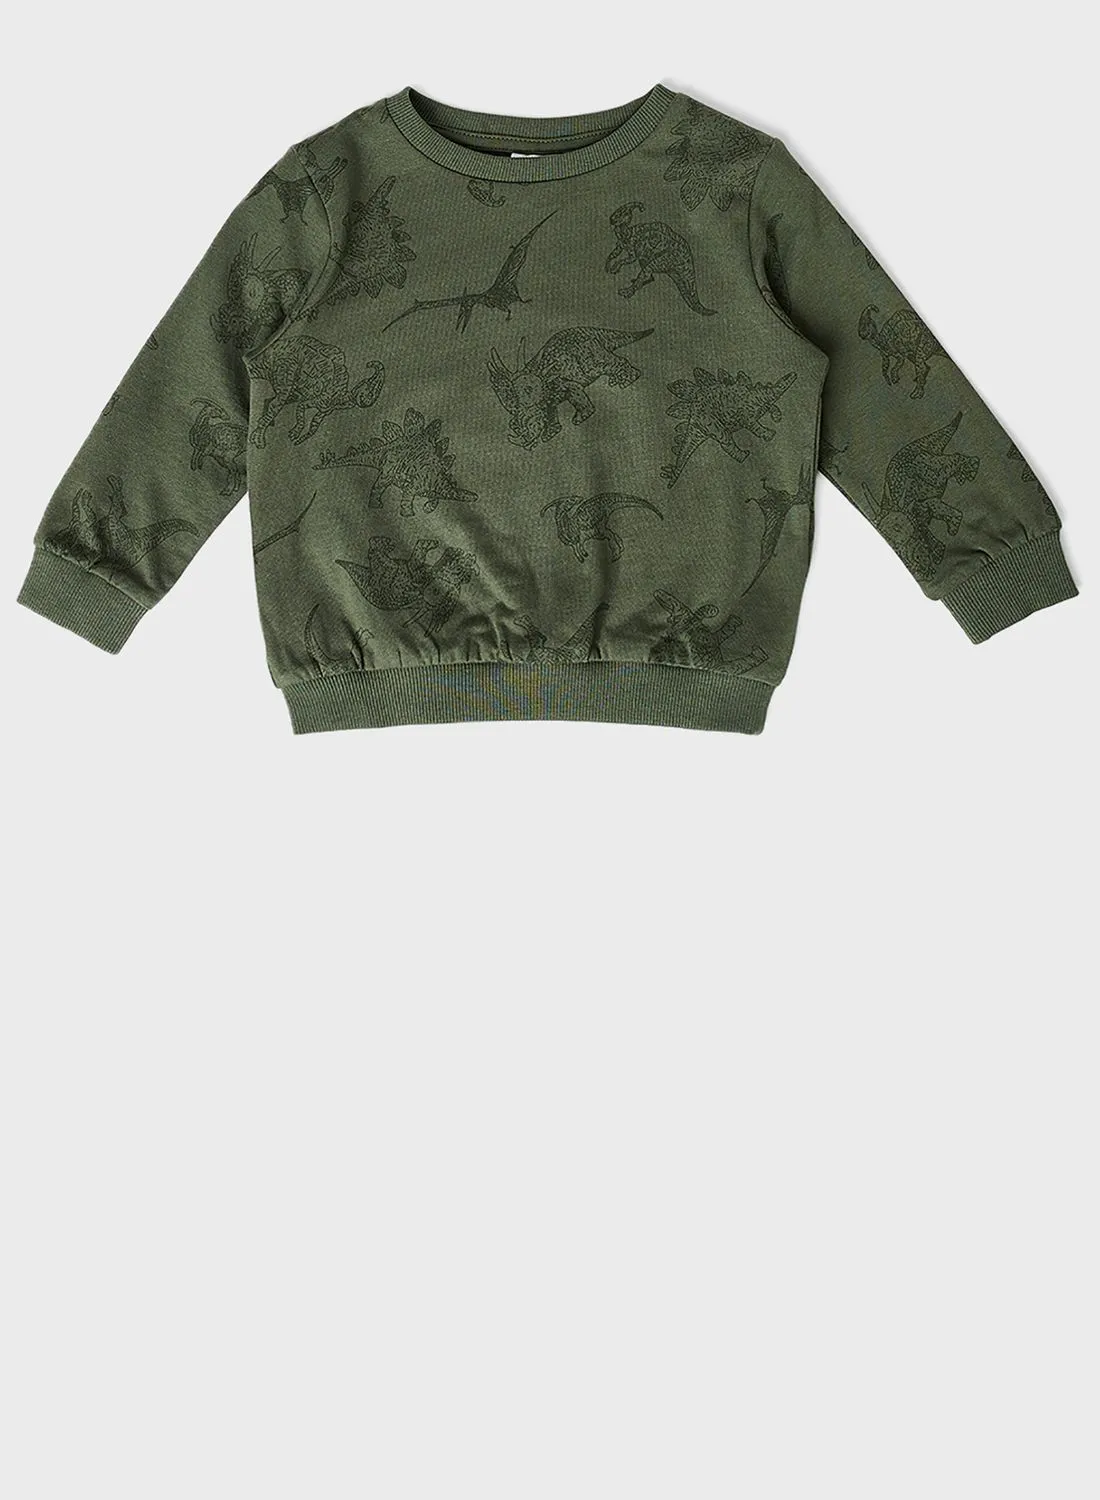 NAME IT Kids Dinosaur Long Sleeve Sweatshirt